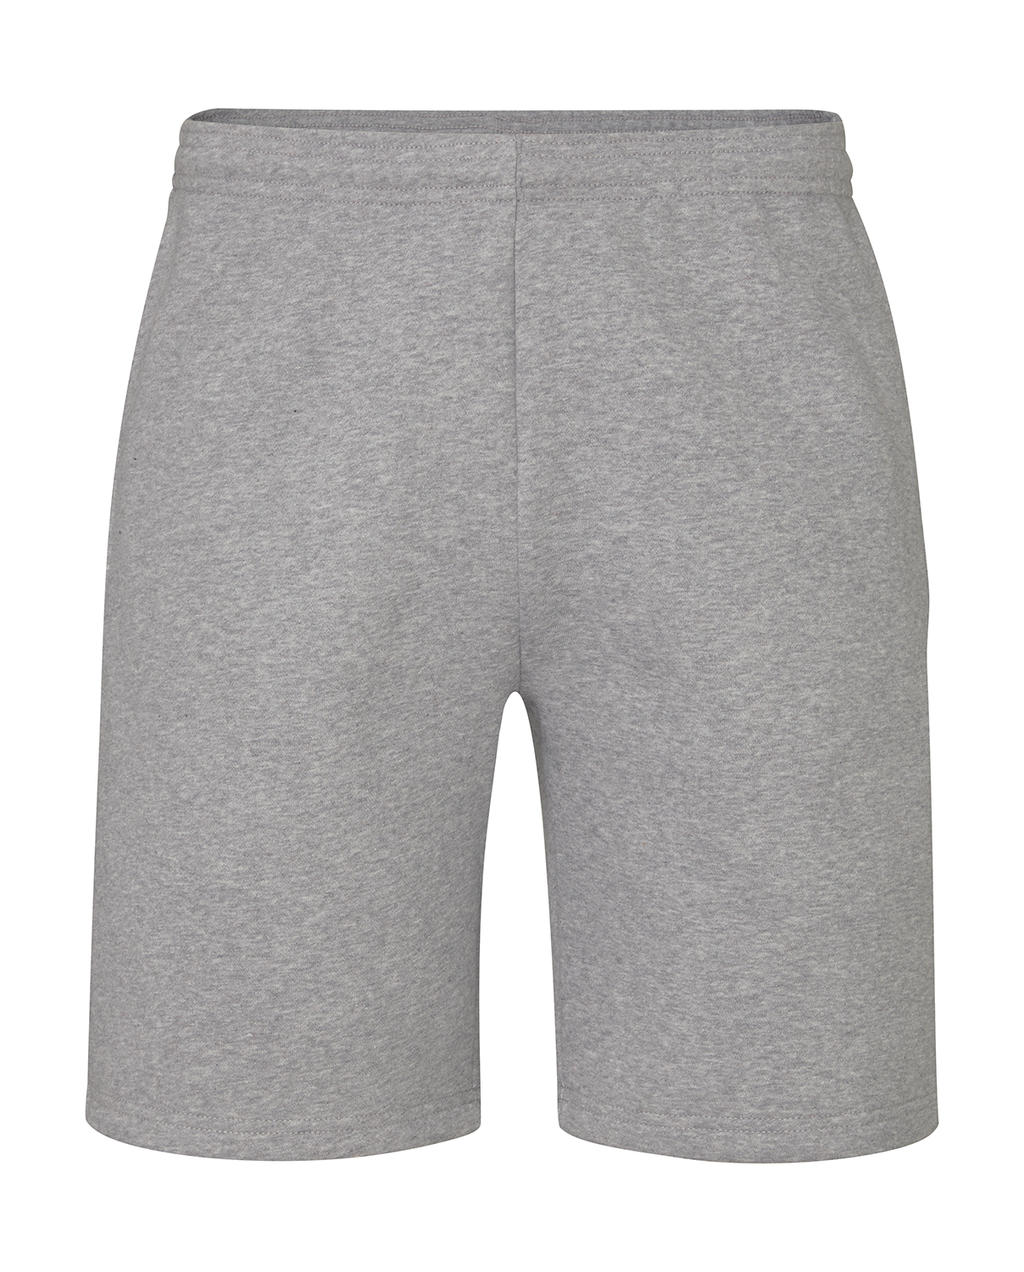 Krátke nohavice Essential - heather grey melange